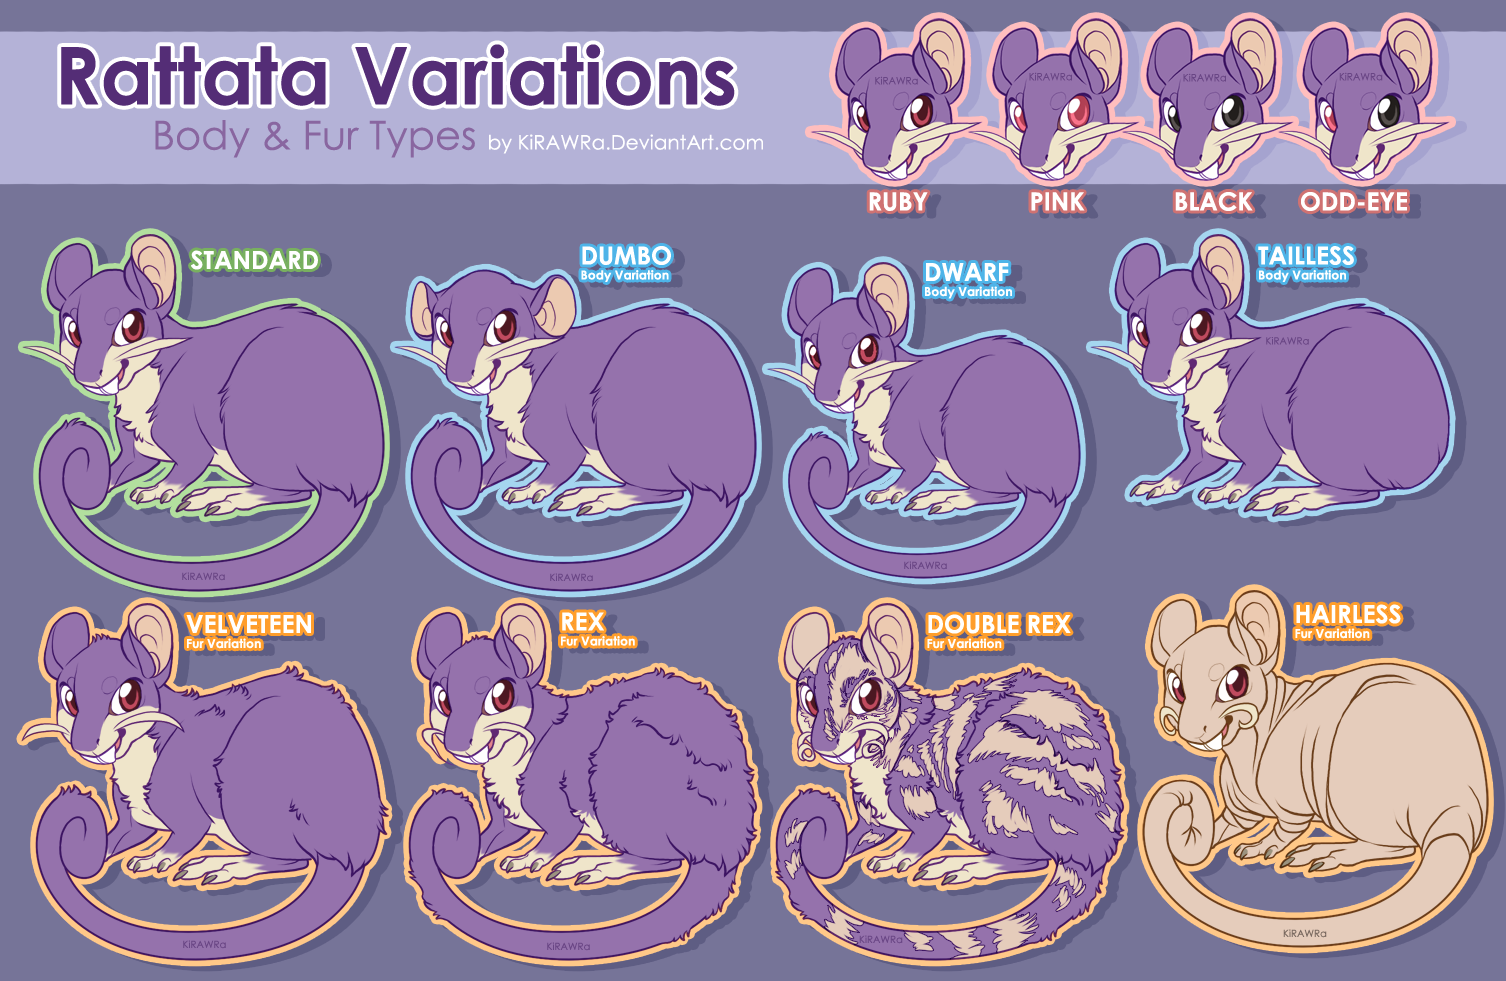 Rattata Variations